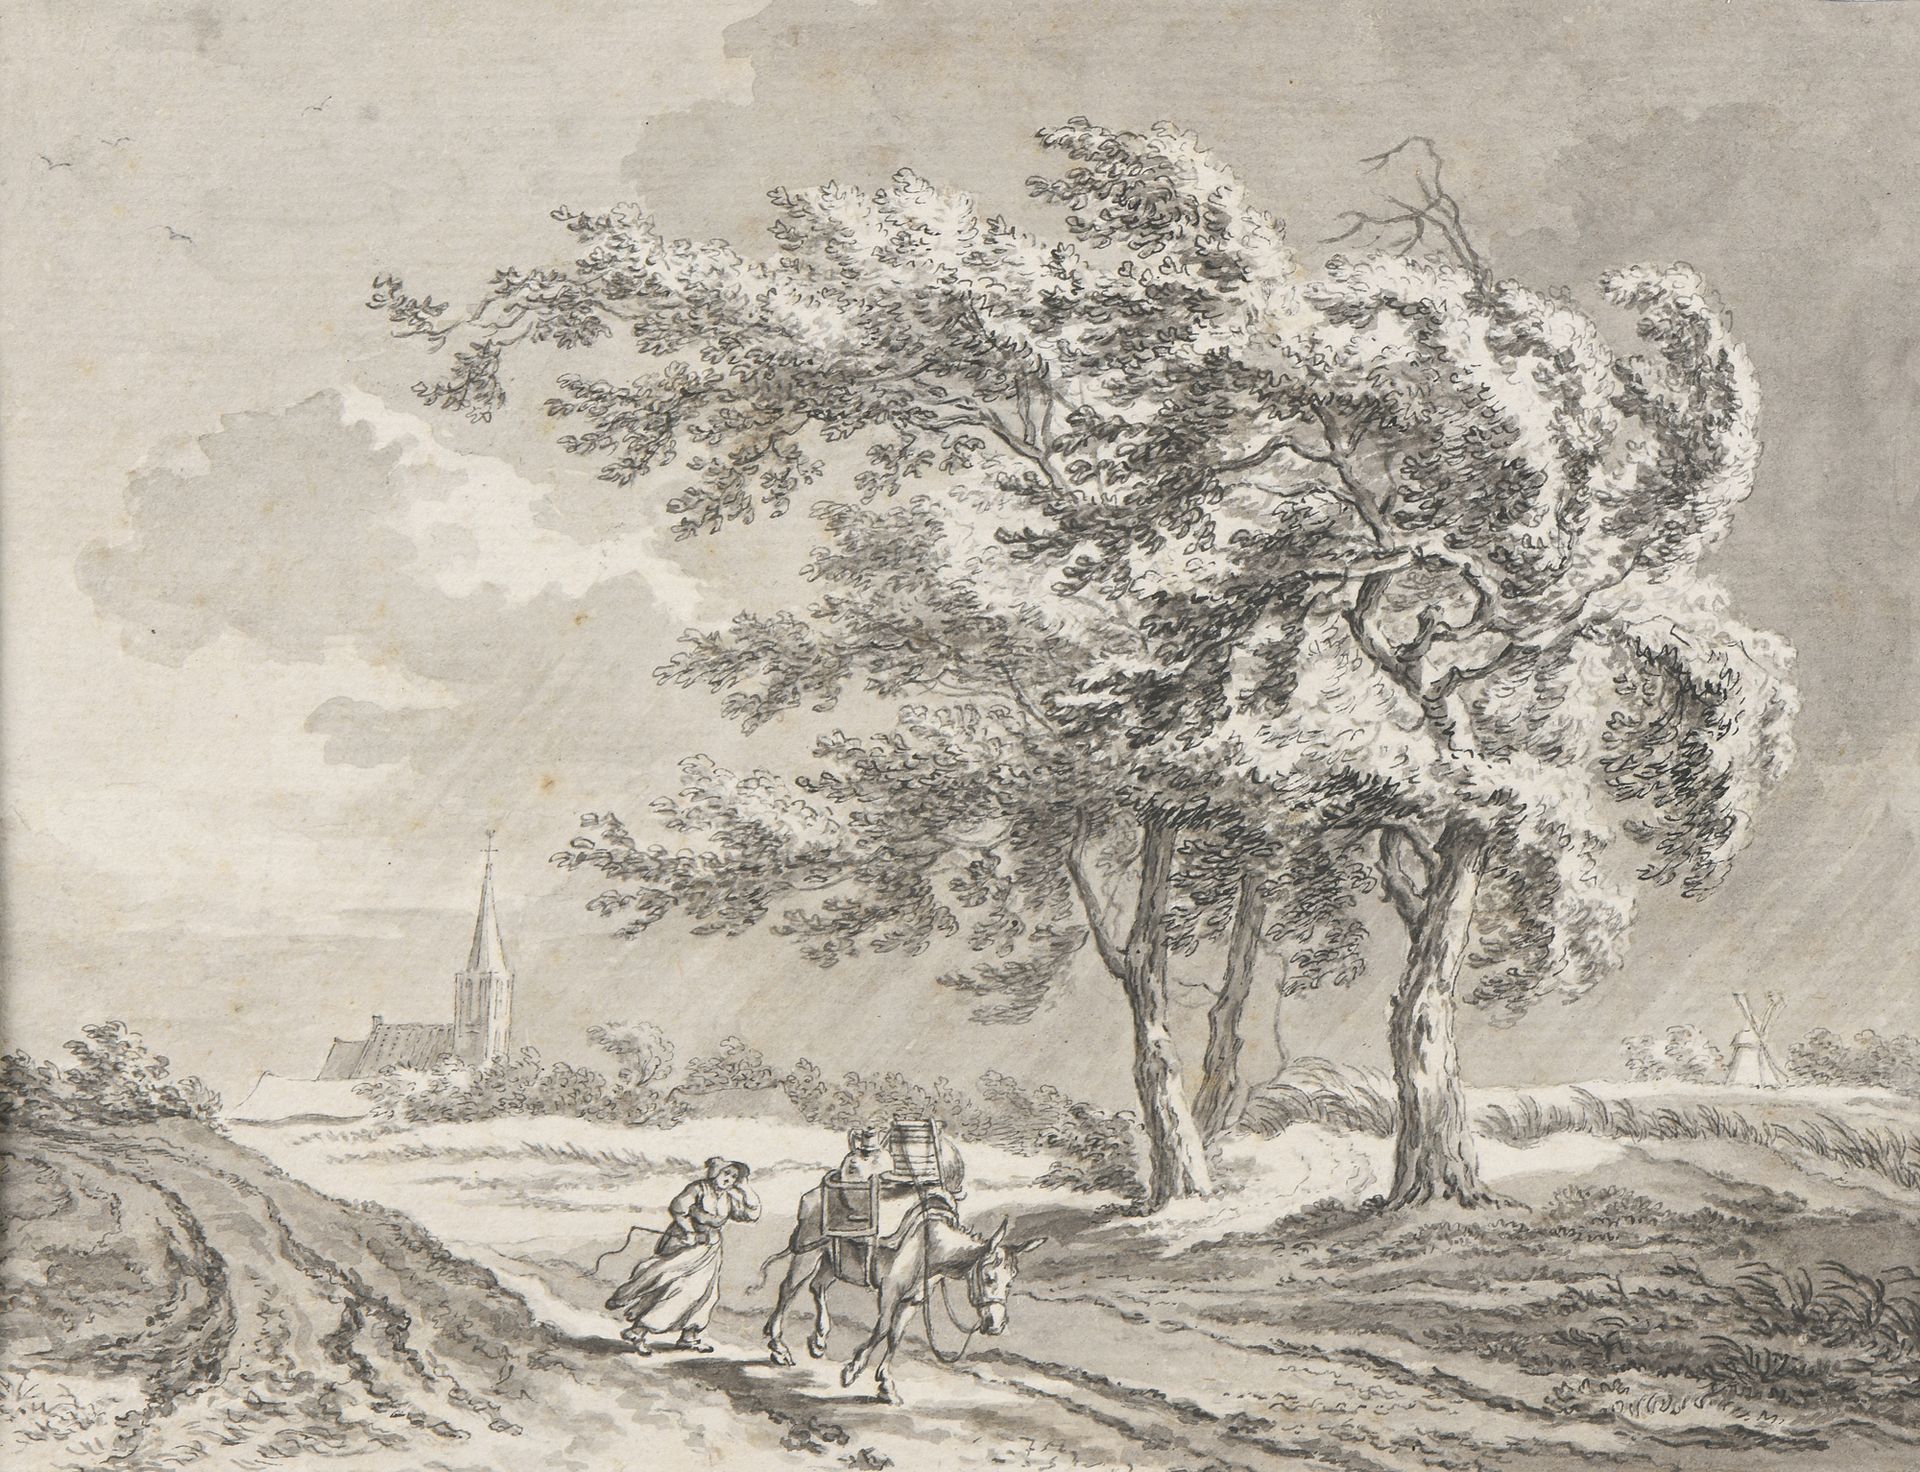 Null 雅各布-CATS (Brouwershaven 1577 - The Hague 1660)

农场女孩在风中牵着她的马

钢笔和黑色墨水，灰色水洗。&hellip;